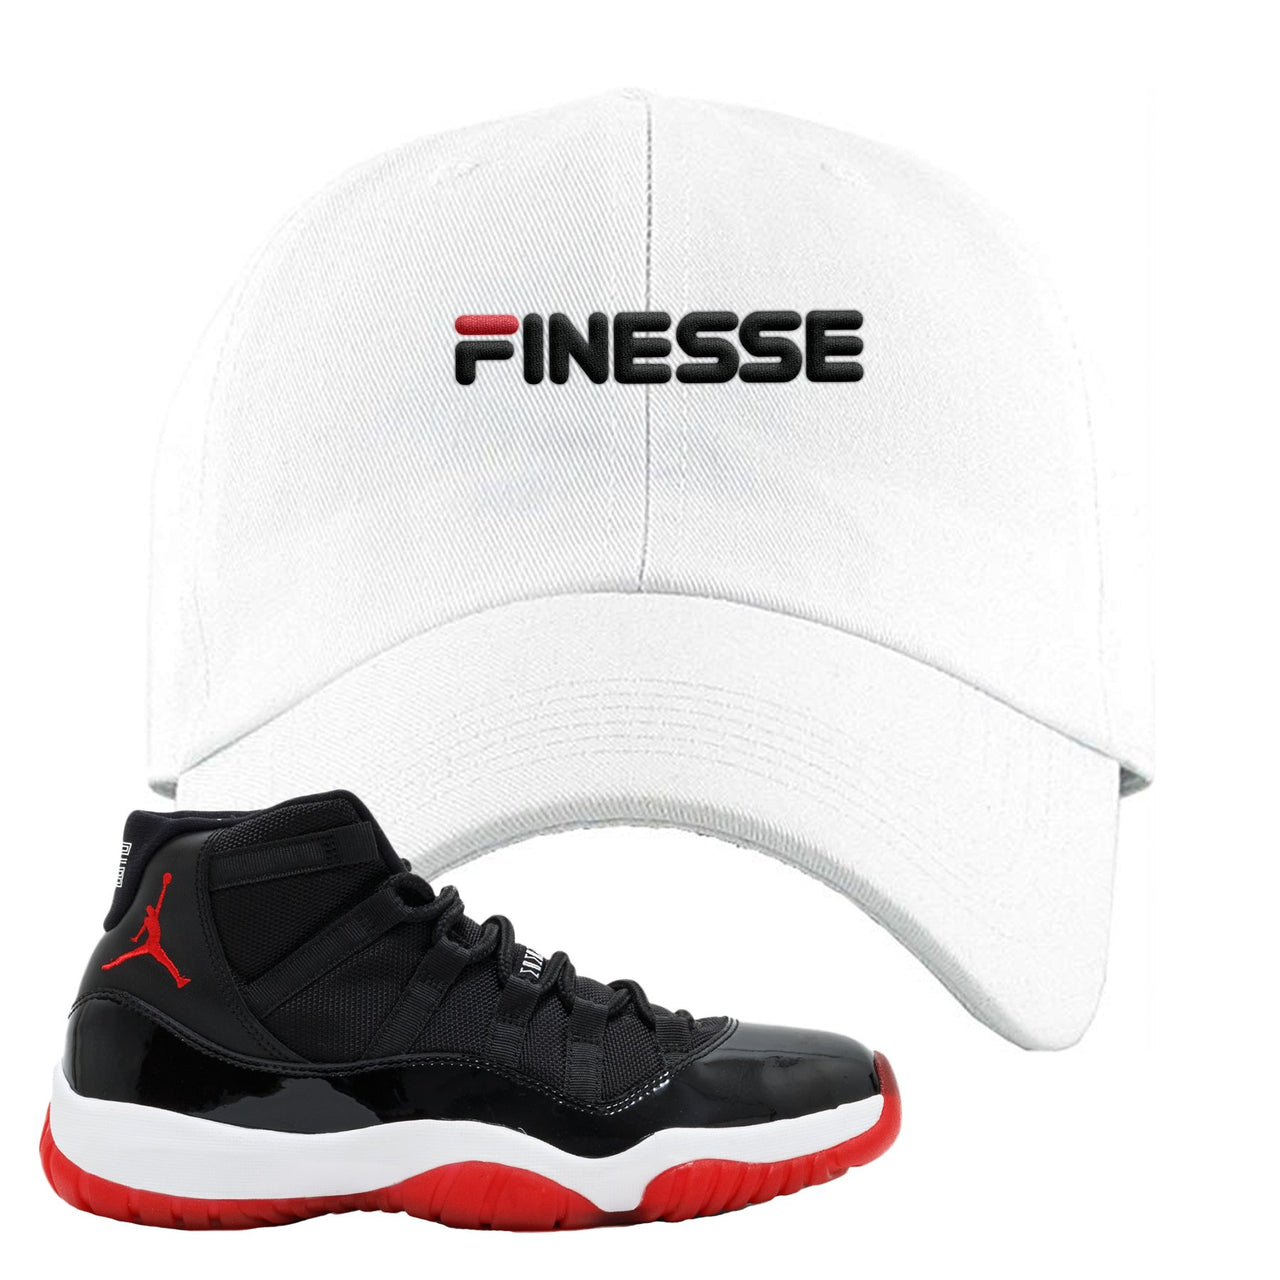 Jordan 11 Bred Finesse White Sneaker Hook Up Dad Hat